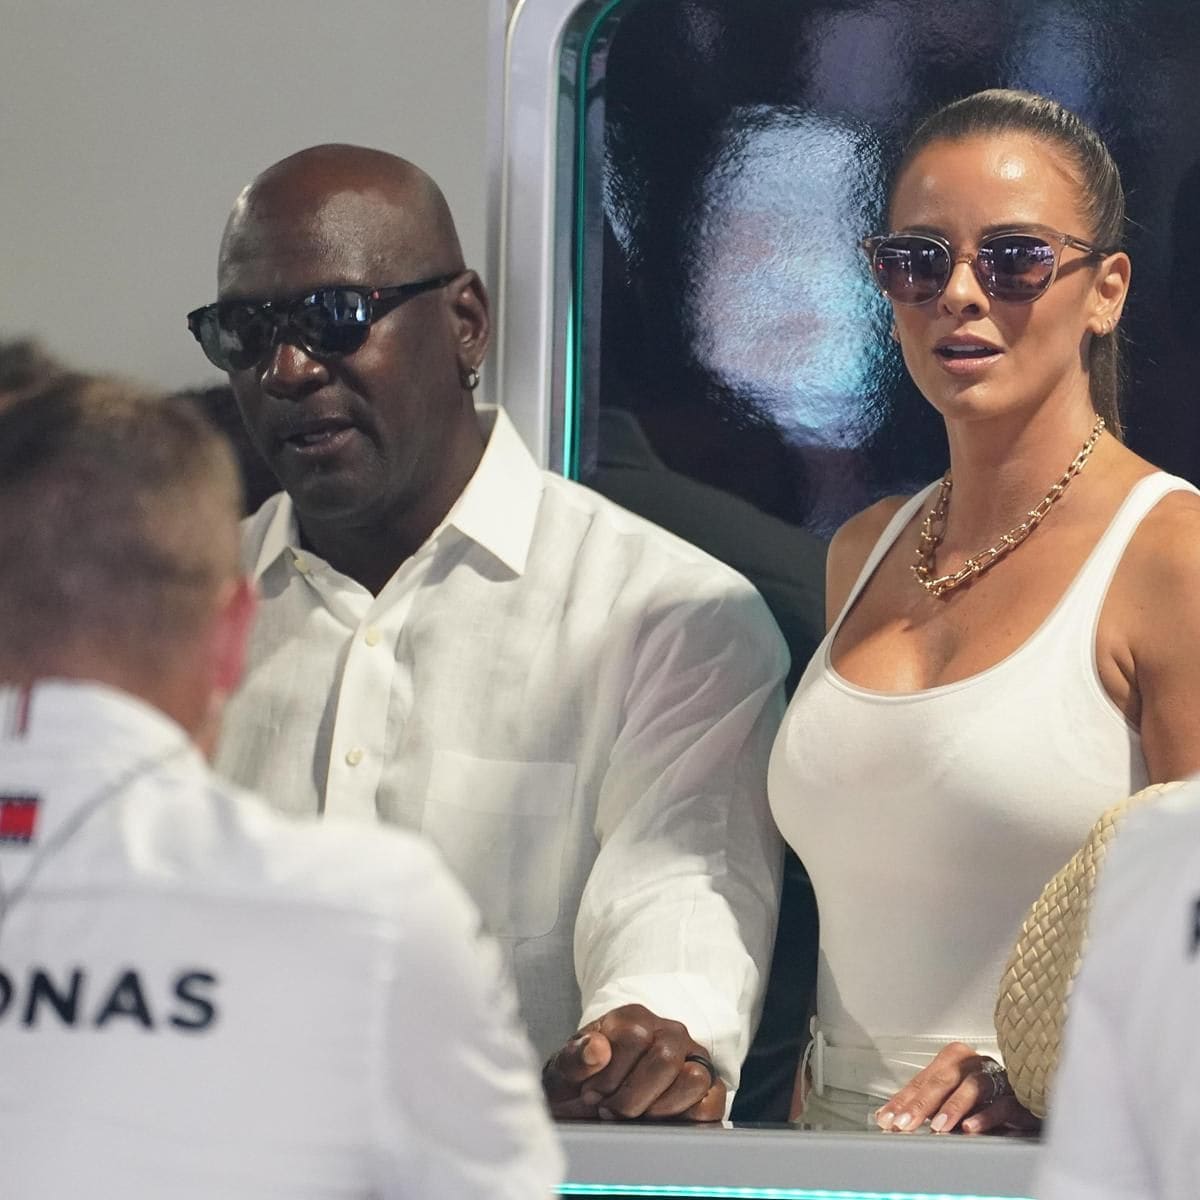 Michael Jordan makes rare appearance with wife Yvette Prieto at Formula 1 in Miami